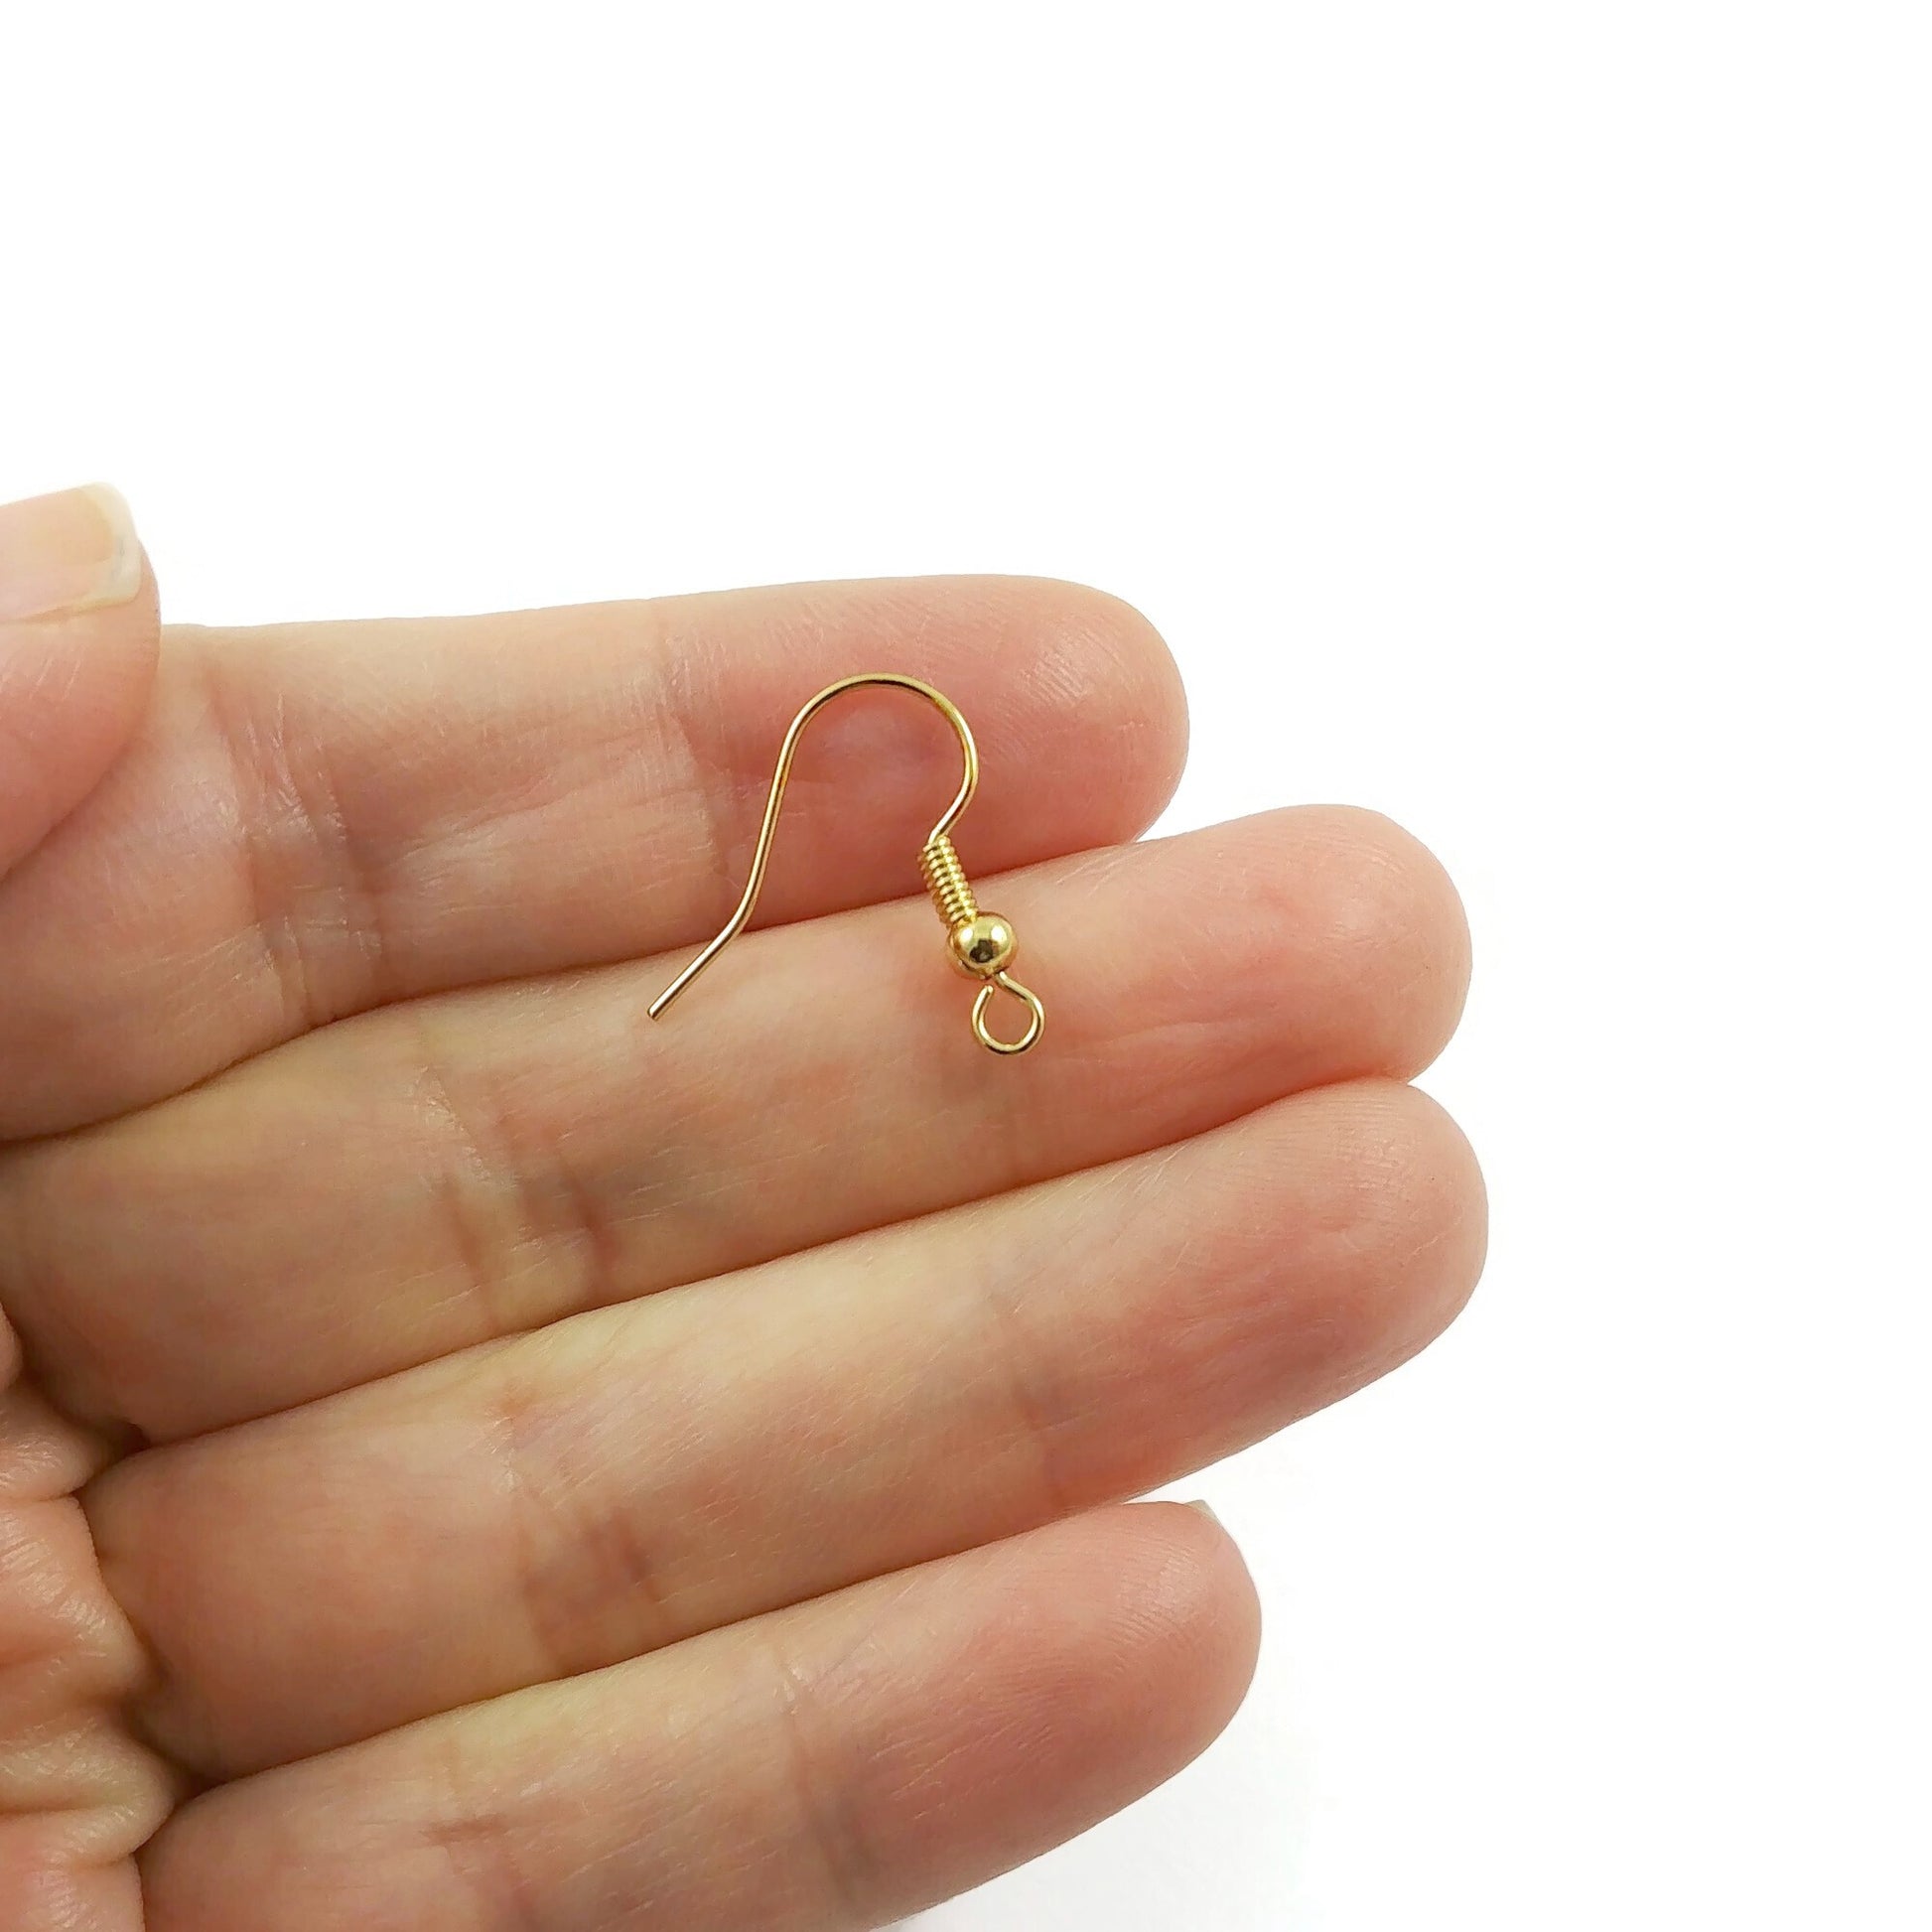 10 Brass earring hooks - Real 18K Gold Plated